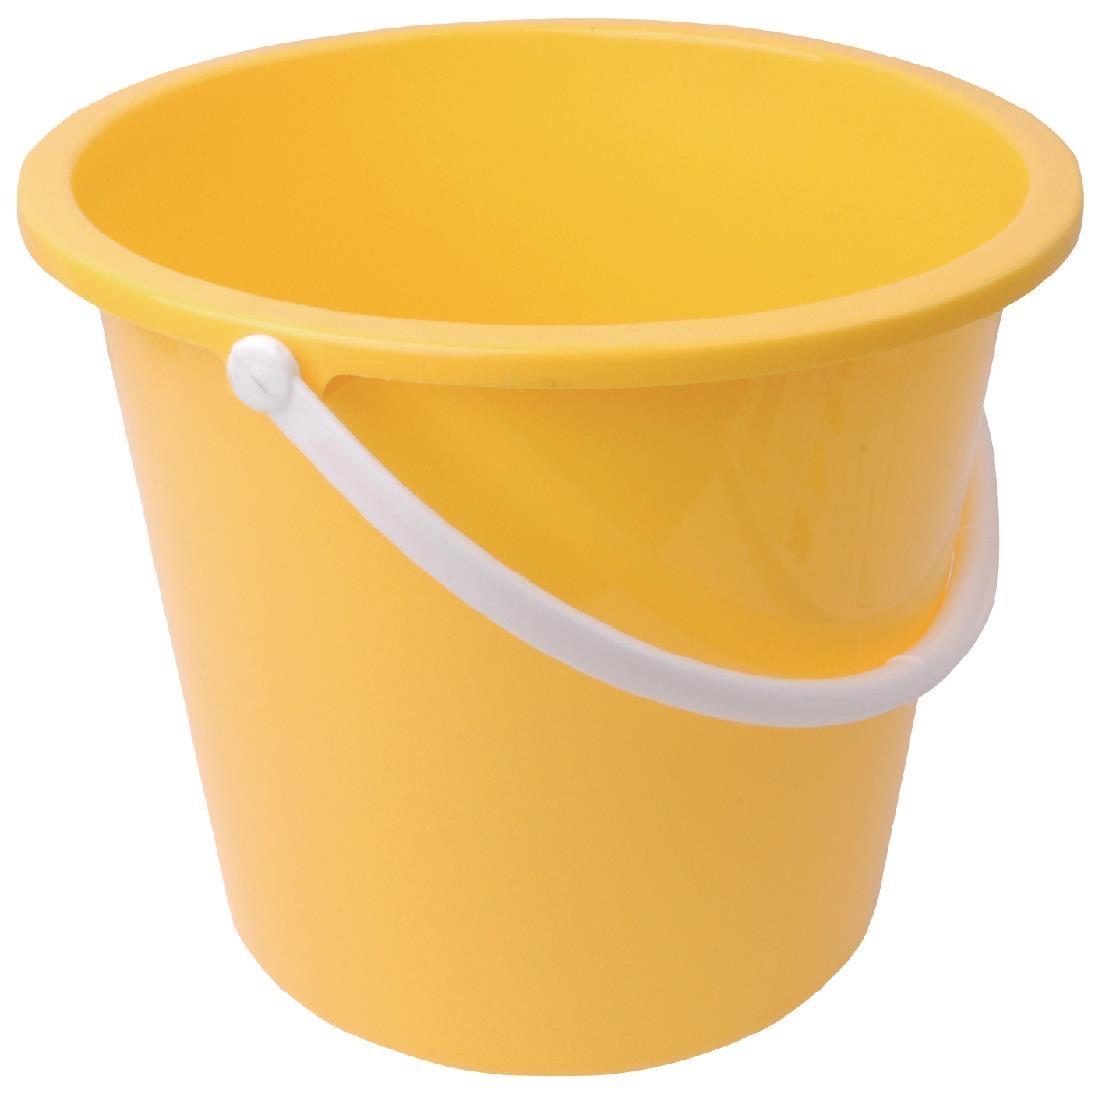 Jantex Round Plastic Bucket Yellow 10Ltr - CD805  - 1